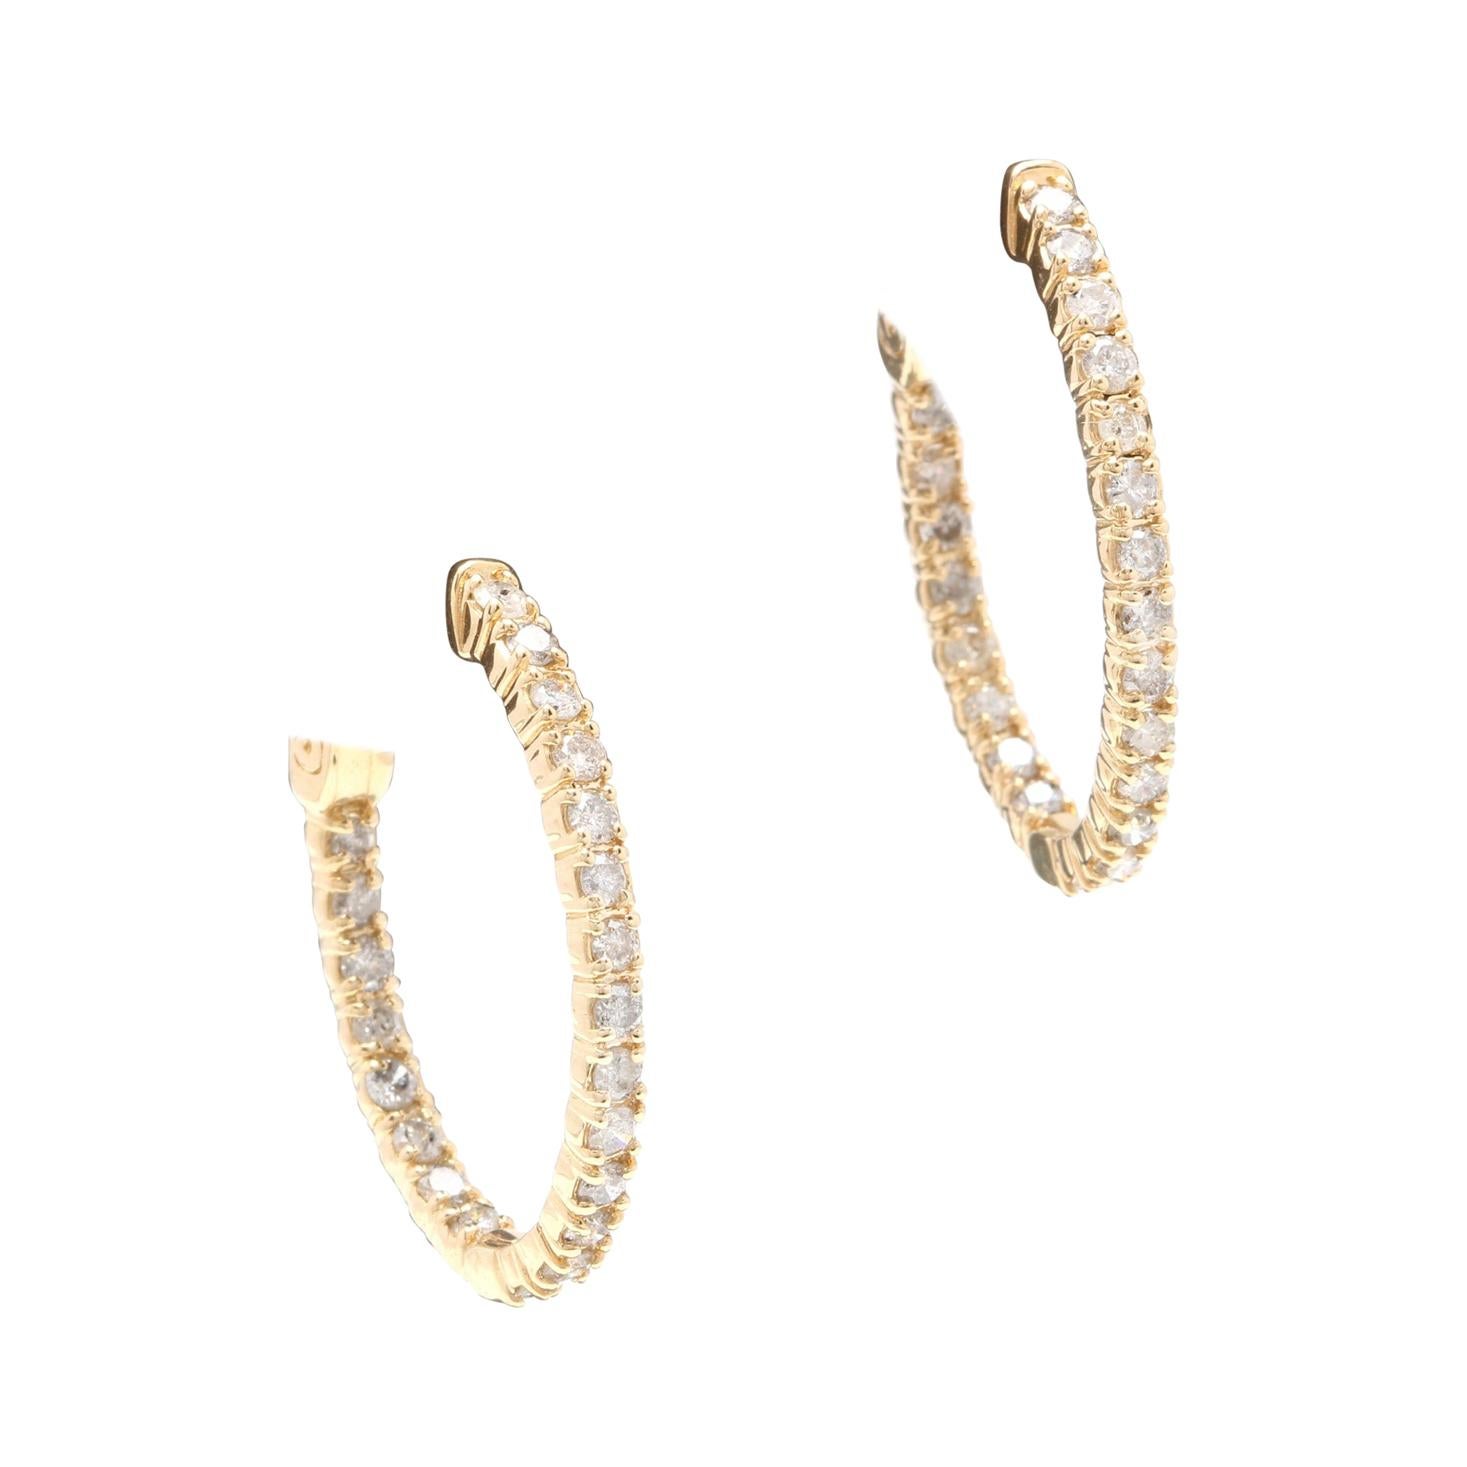 Exquisite 2.25 Carat Natural Diamond 14 Karat Solid Yellow Gold Hoop Earrings For Sale